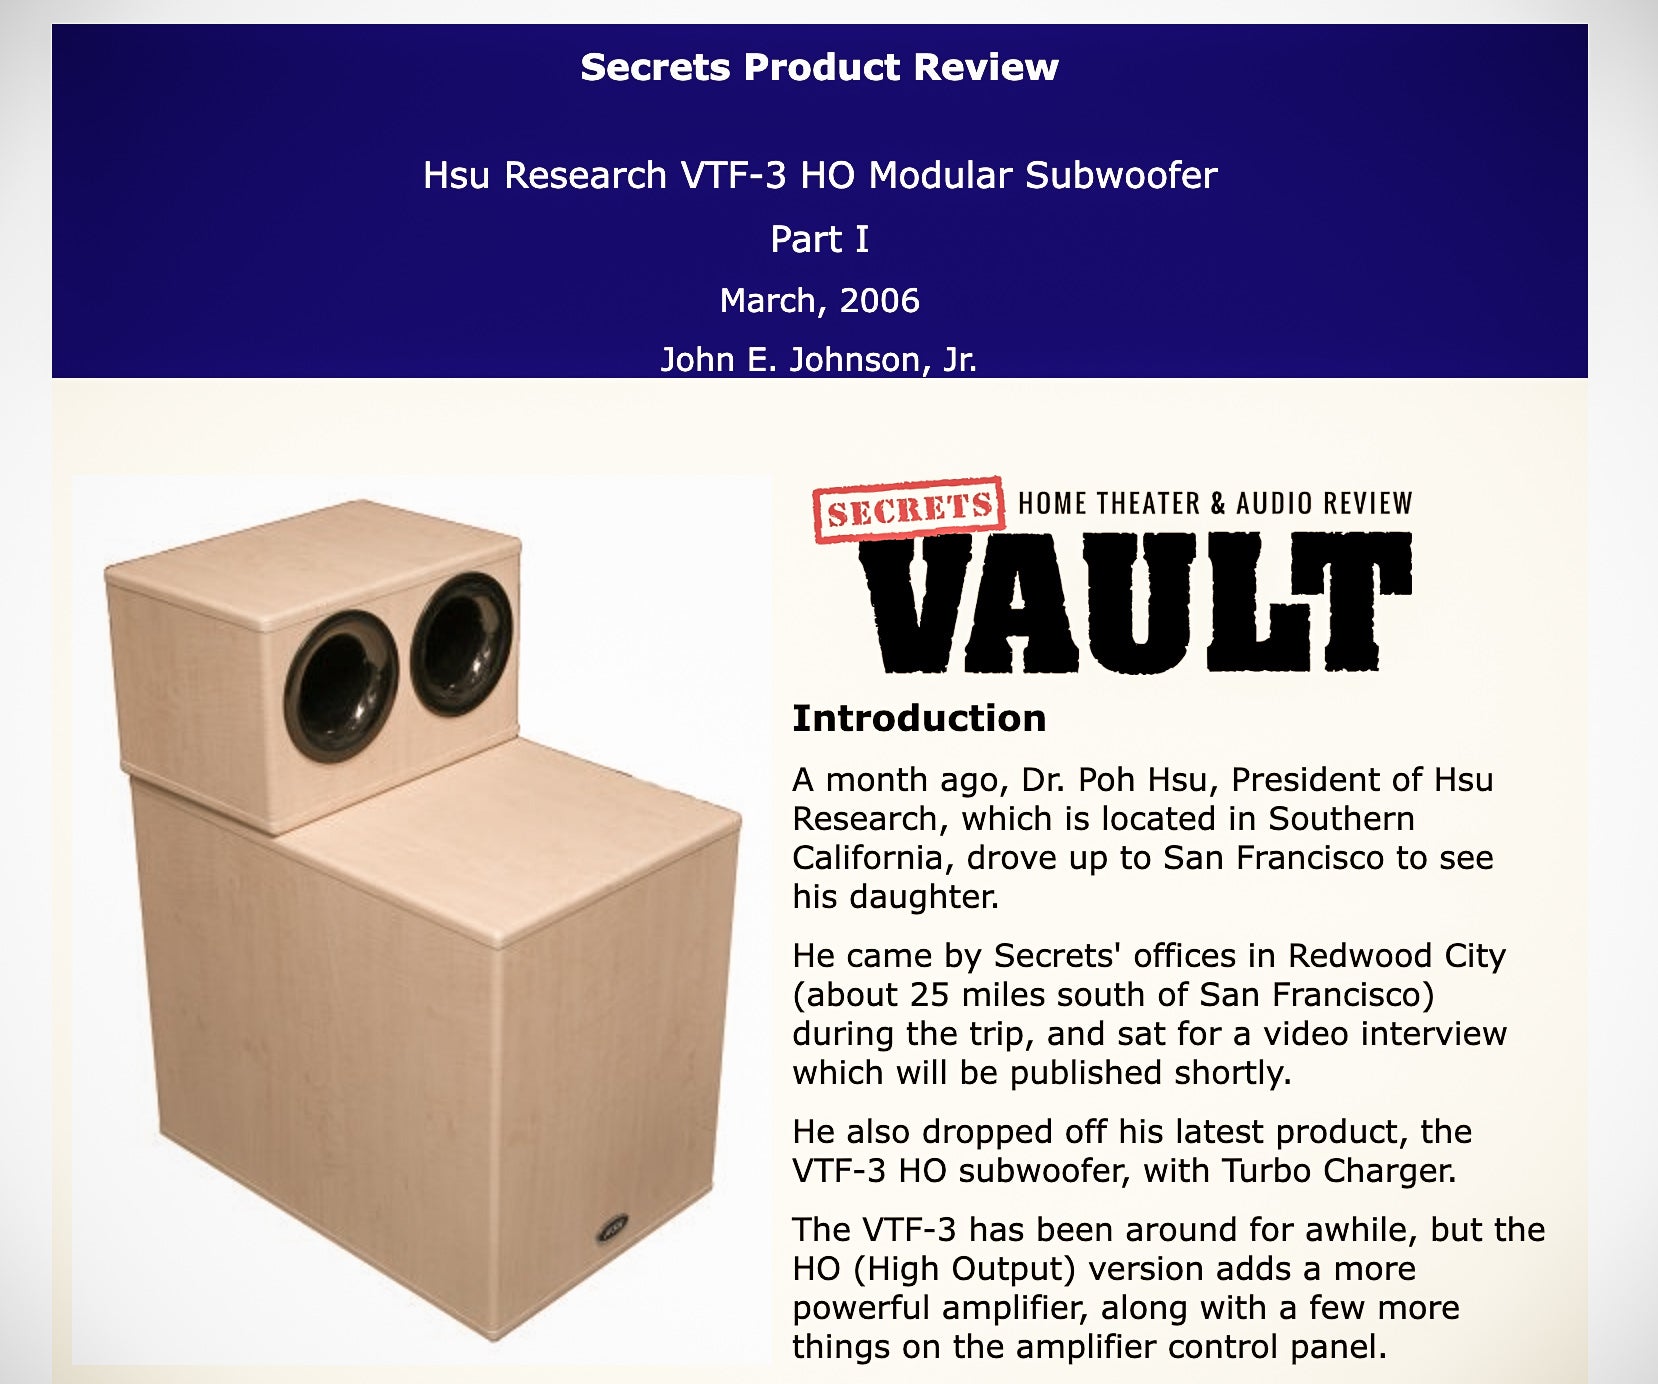 Secrets Home Theater & Audio Review: VTF-3 HO Modular Subwoofer